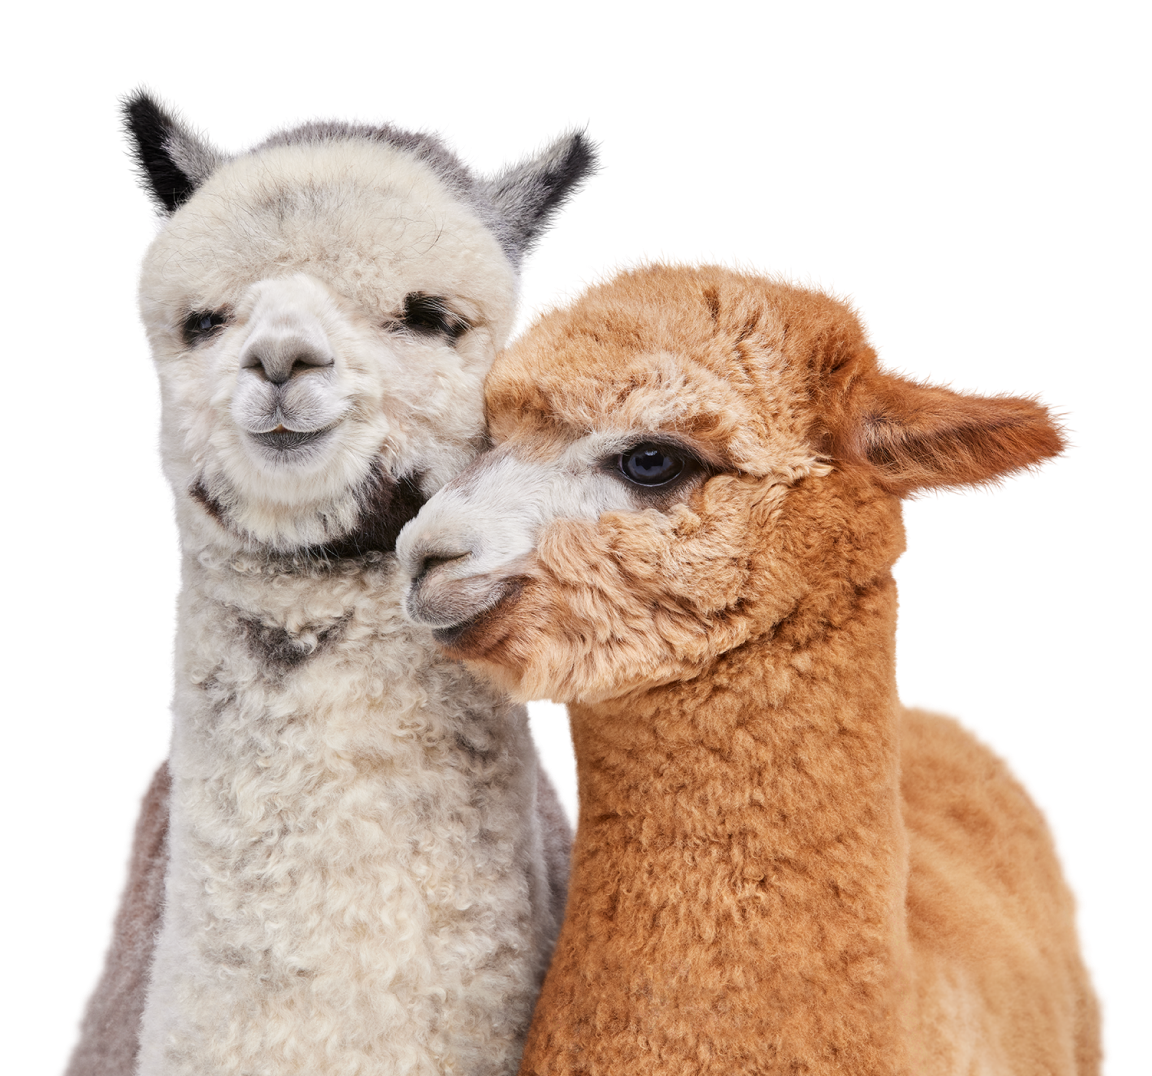 A pair of TELUS critter alpacas